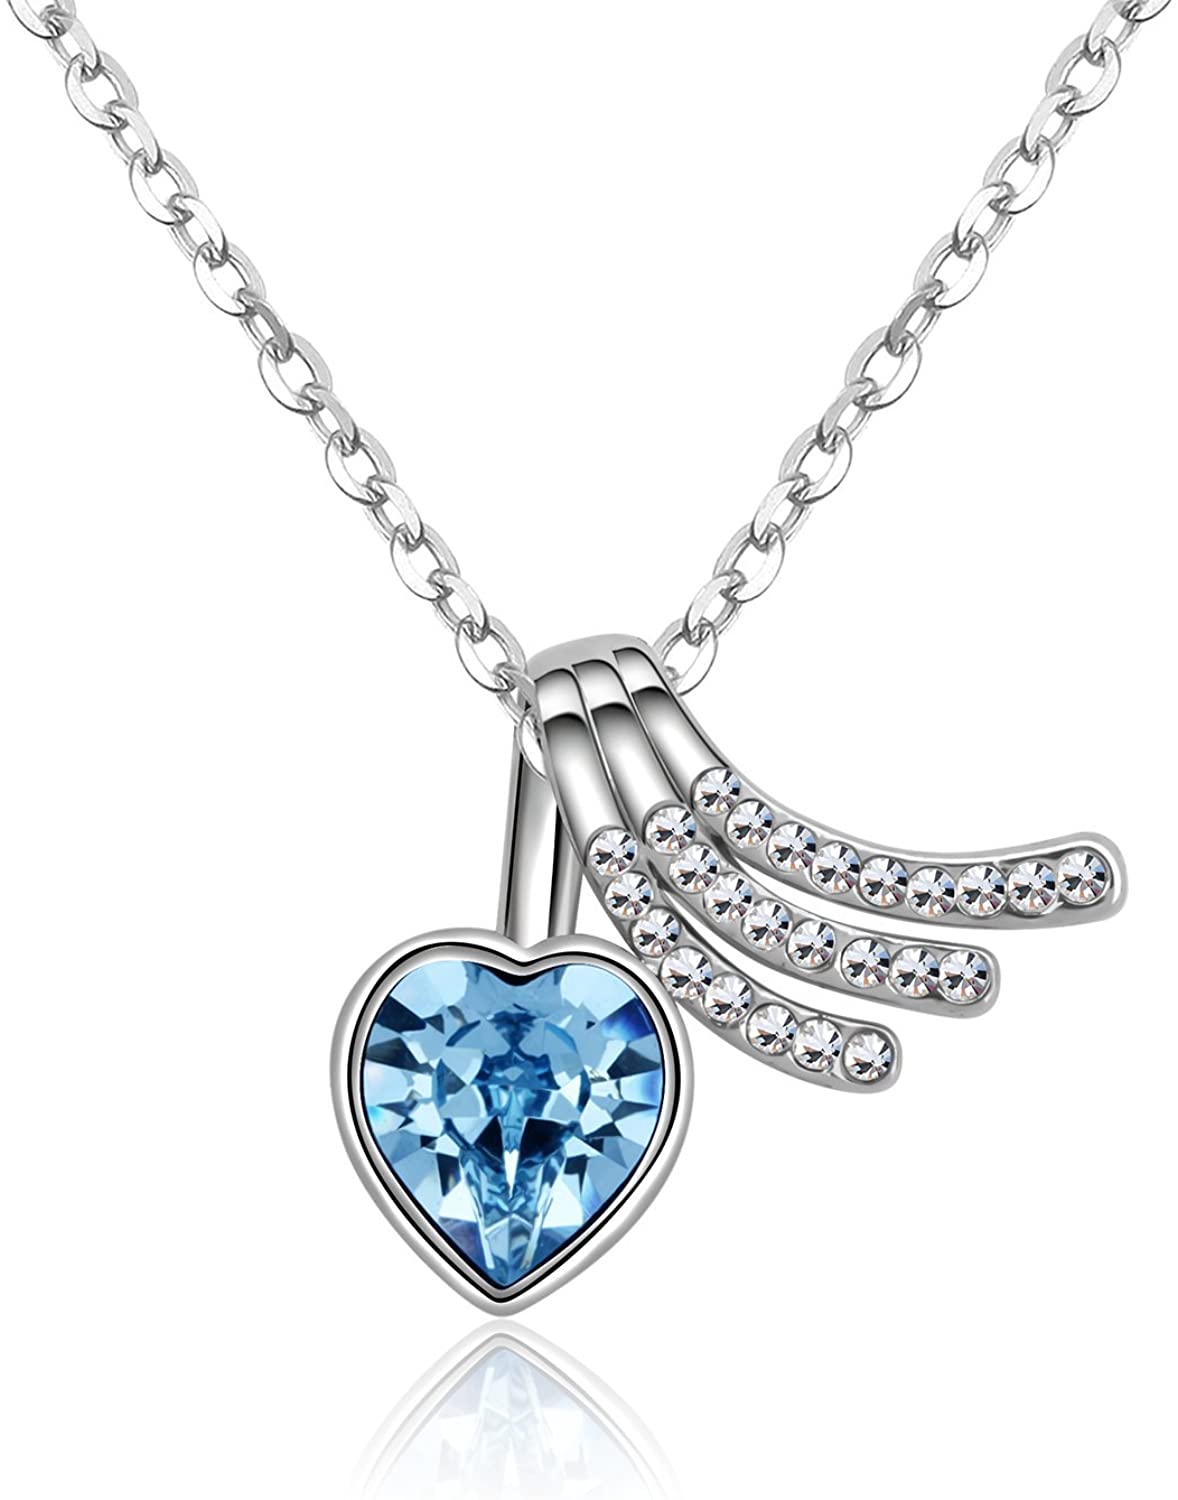 Lady Color Swarovski Crystal Mom Blue Heart Necklace. | eBay